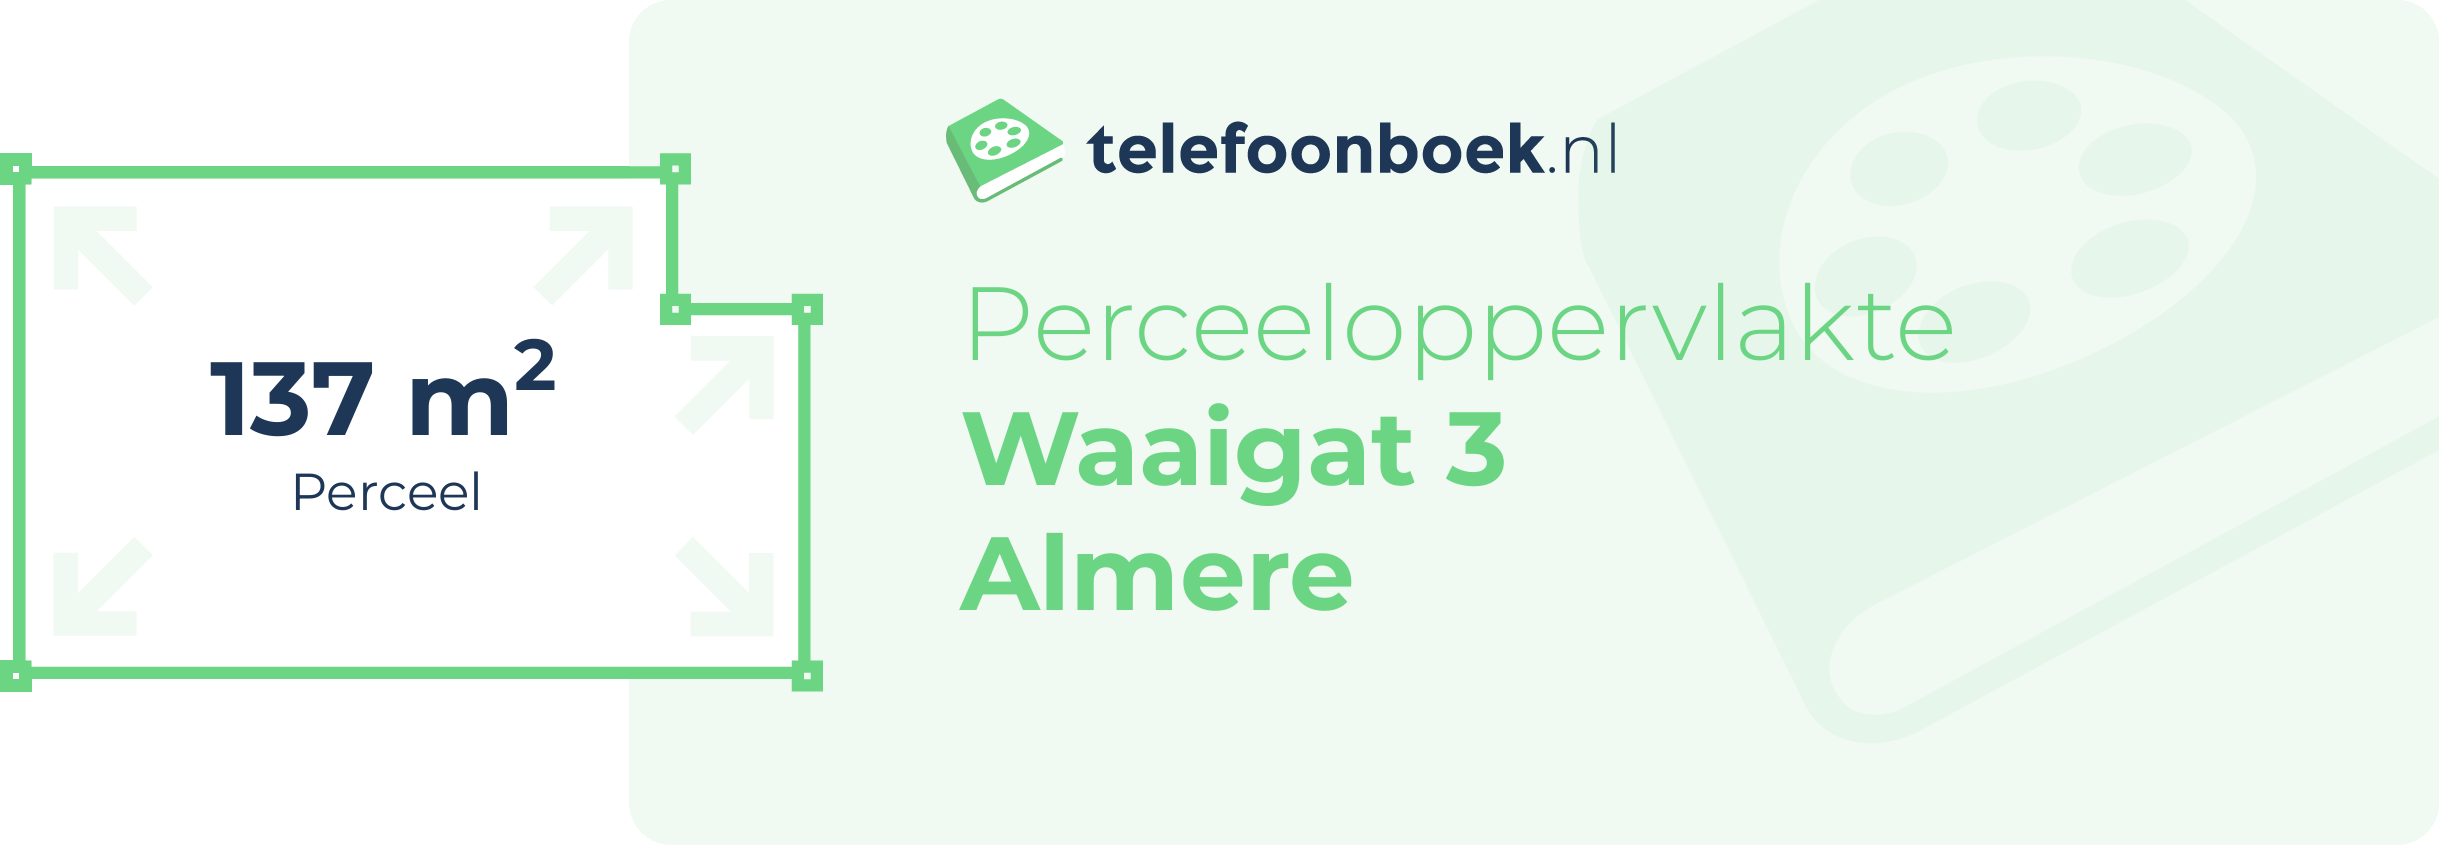 Perceeloppervlakte Waaigat 3 Almere